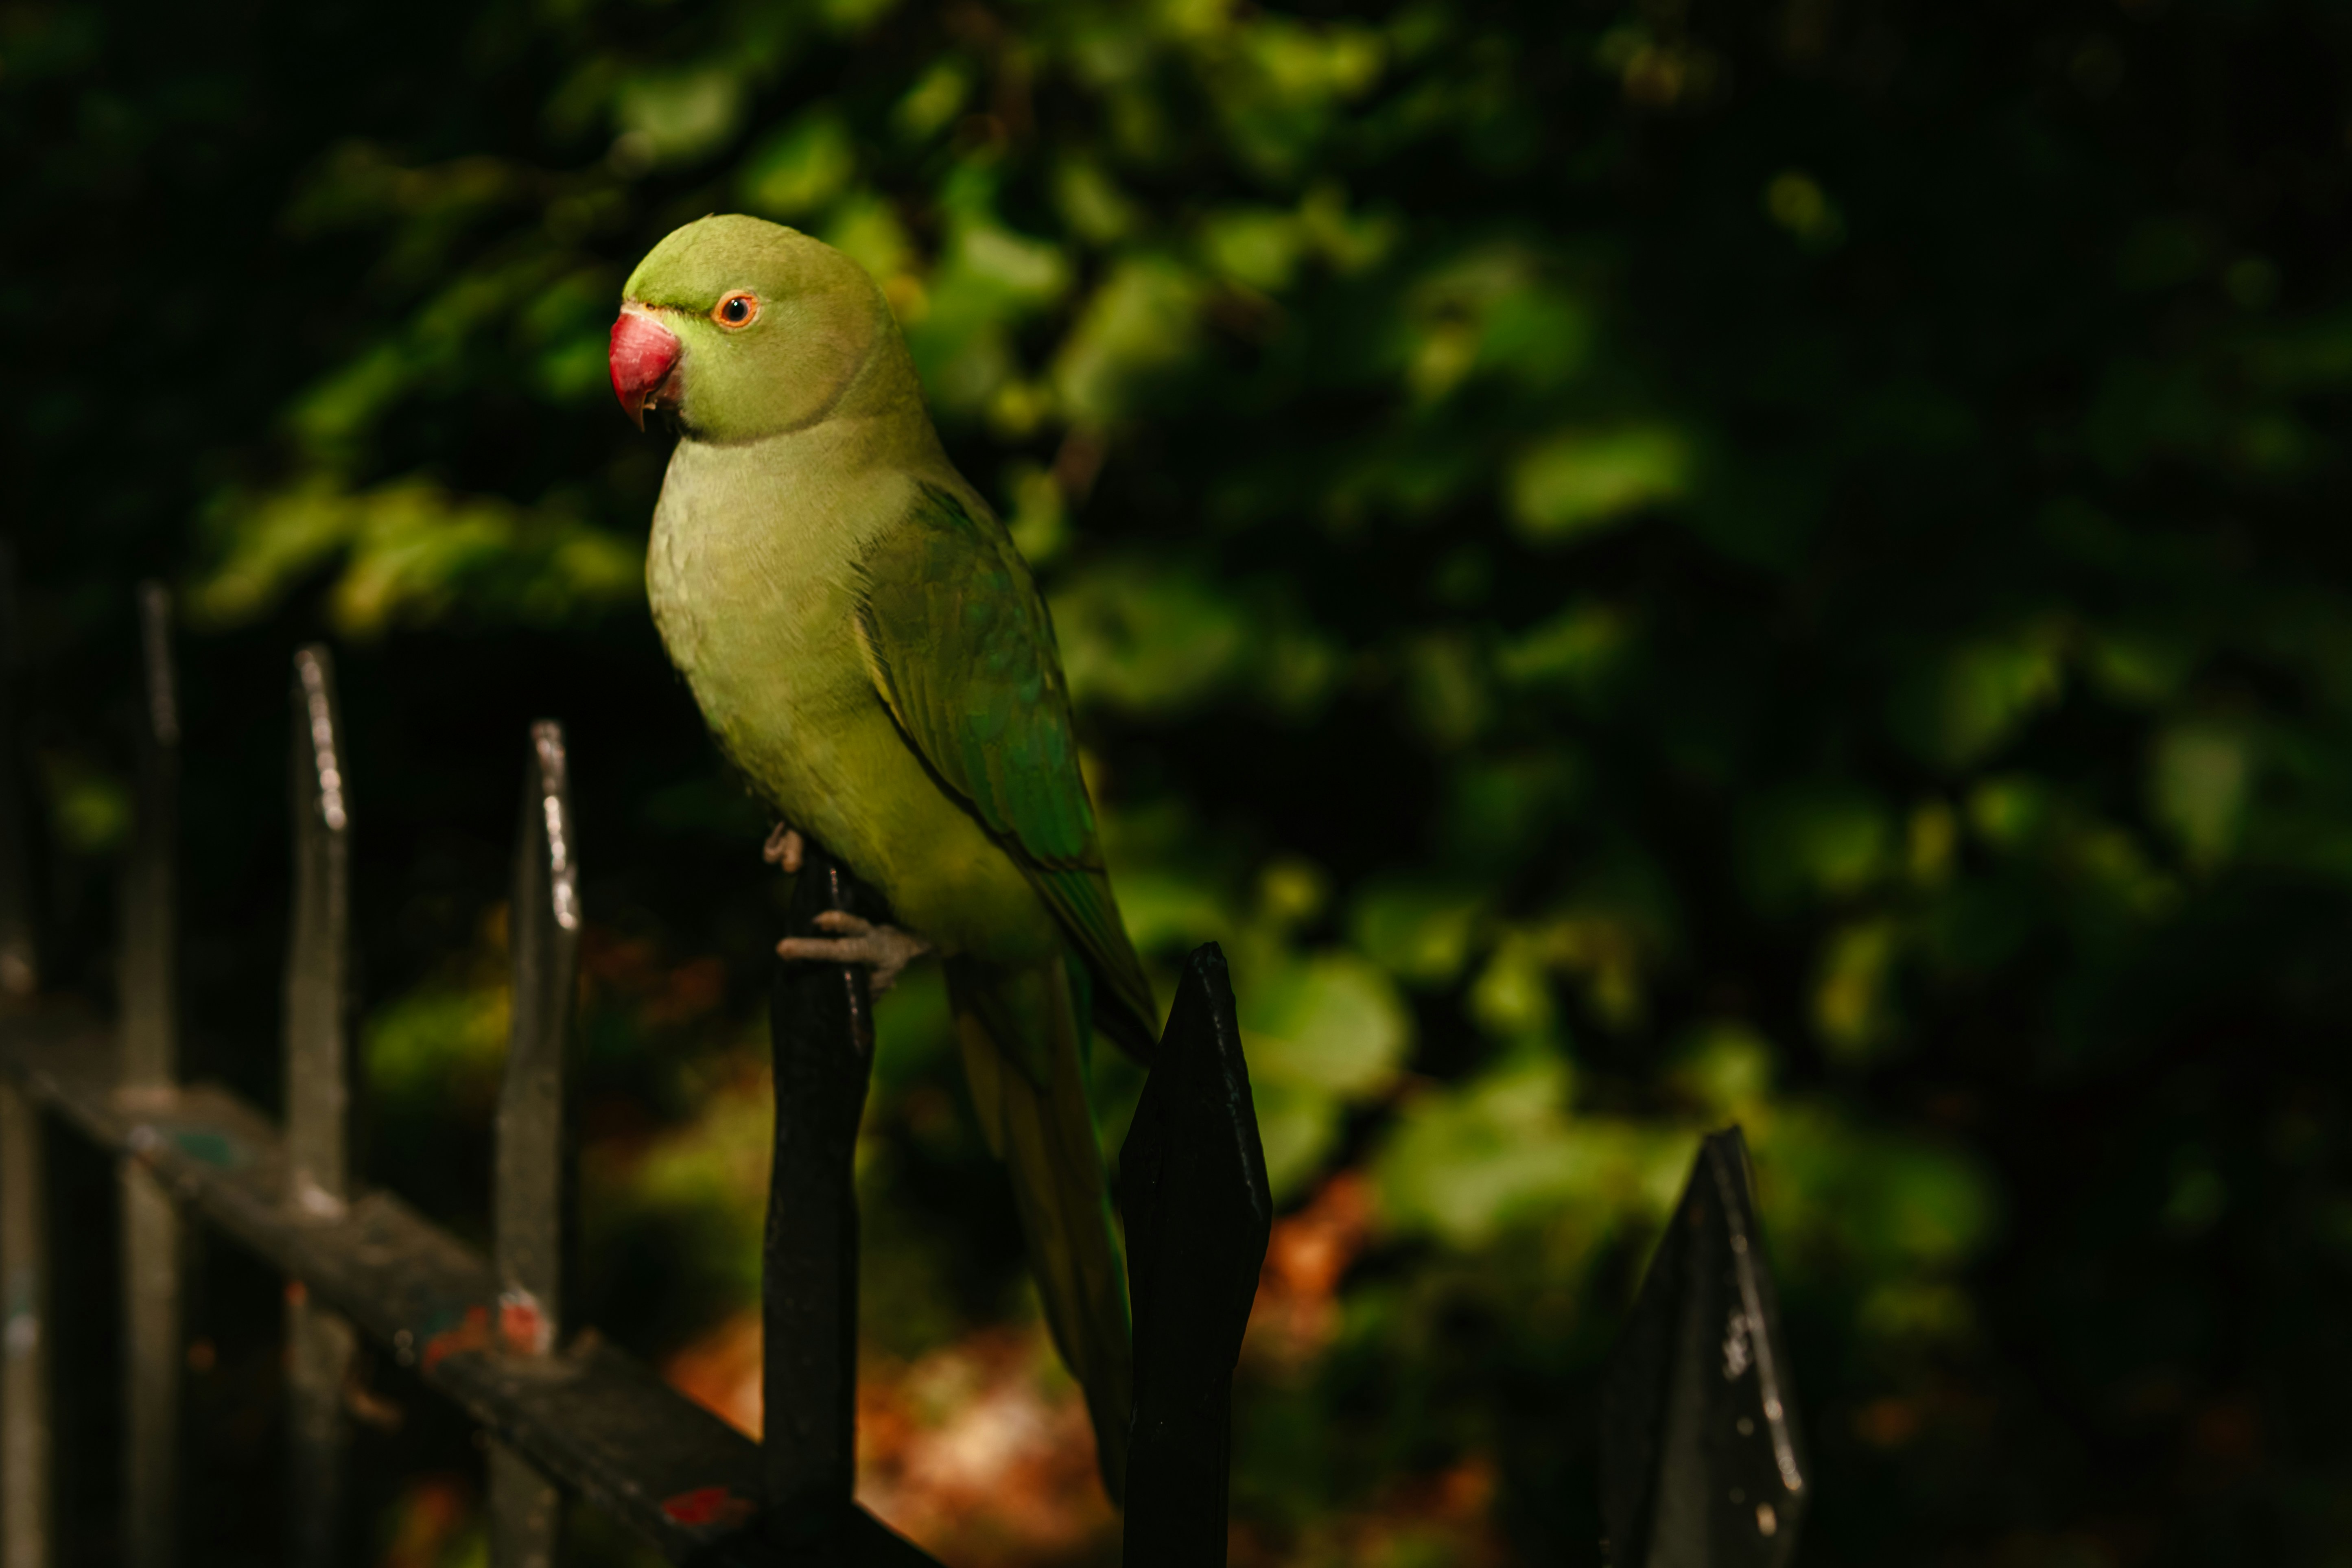 Green parrot. London, October 2019